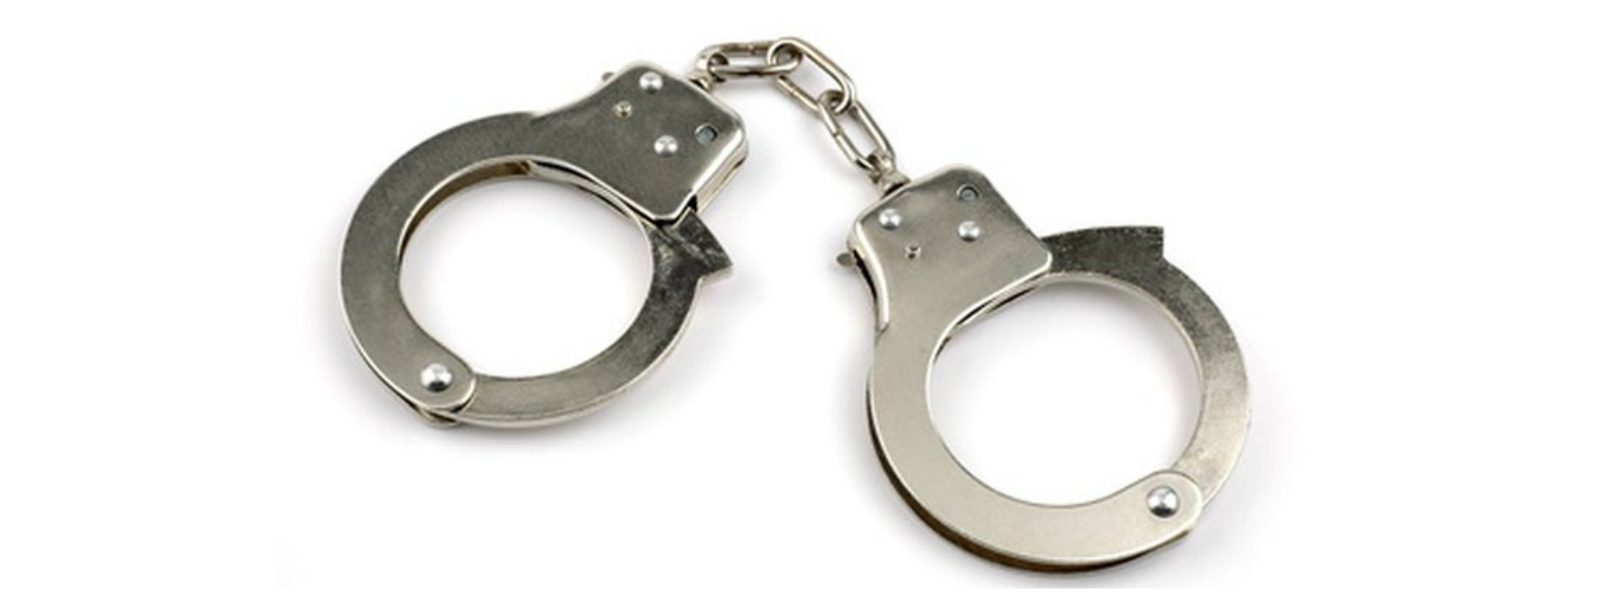 Six arrested at Peliyagoda Police station